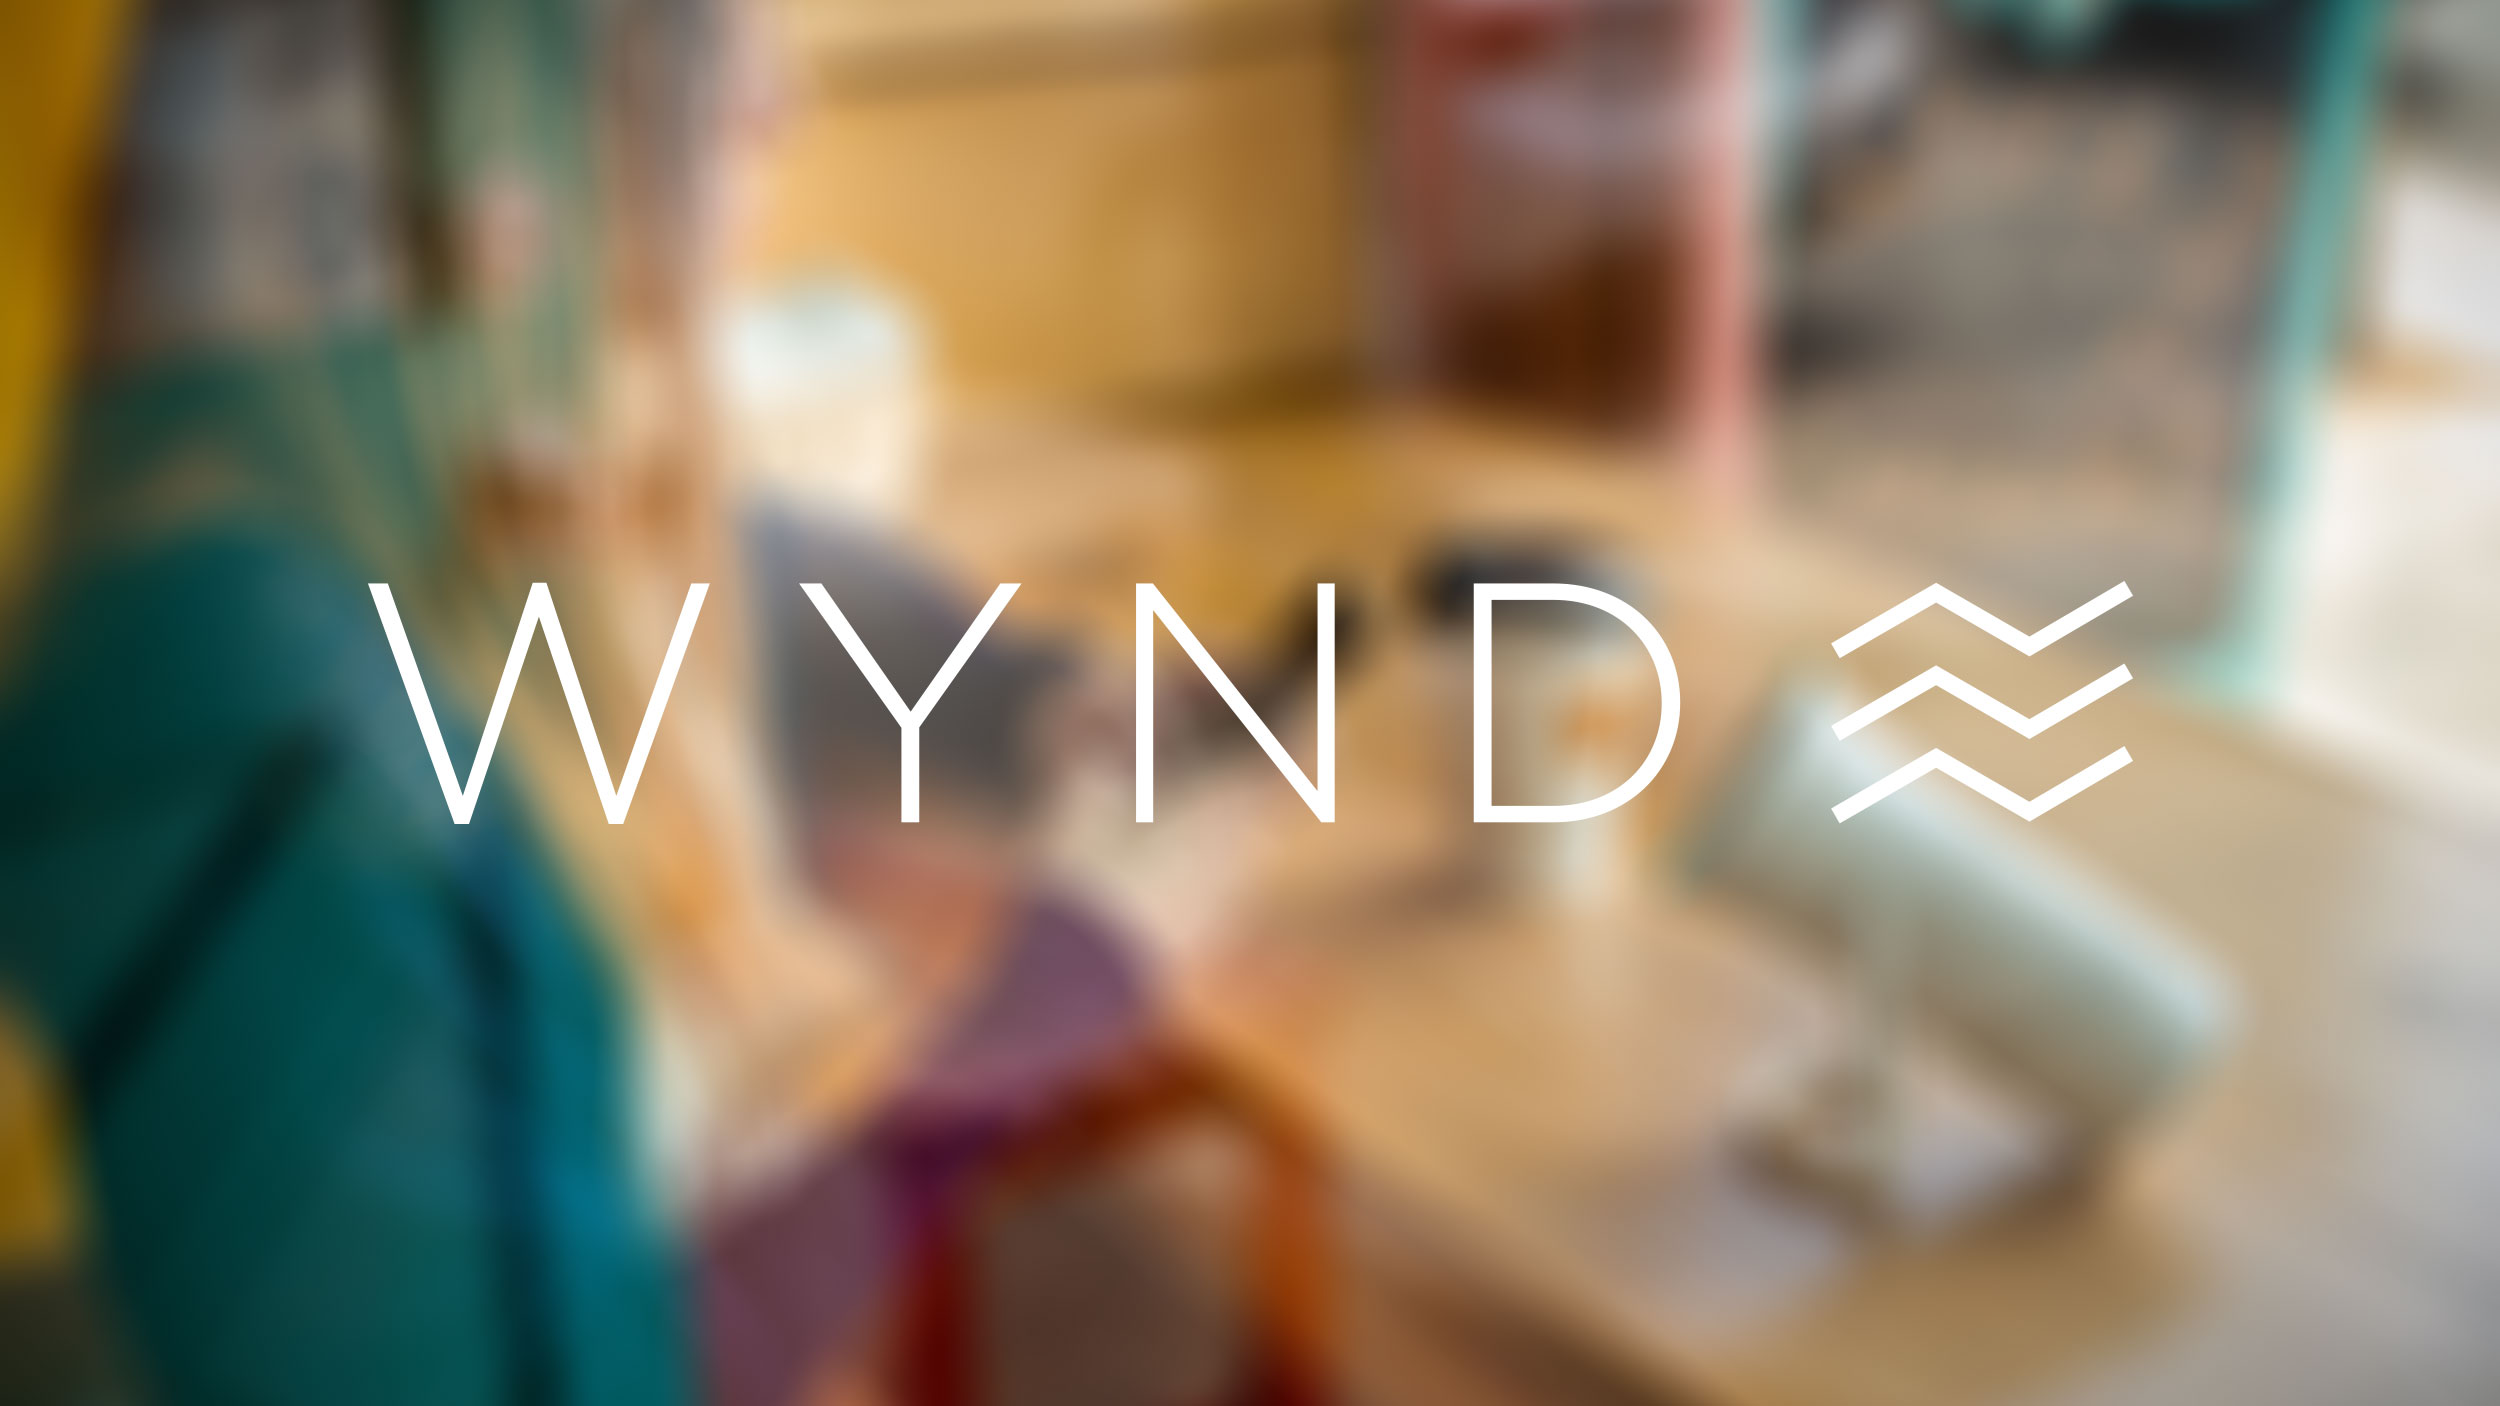 The Wynd logo